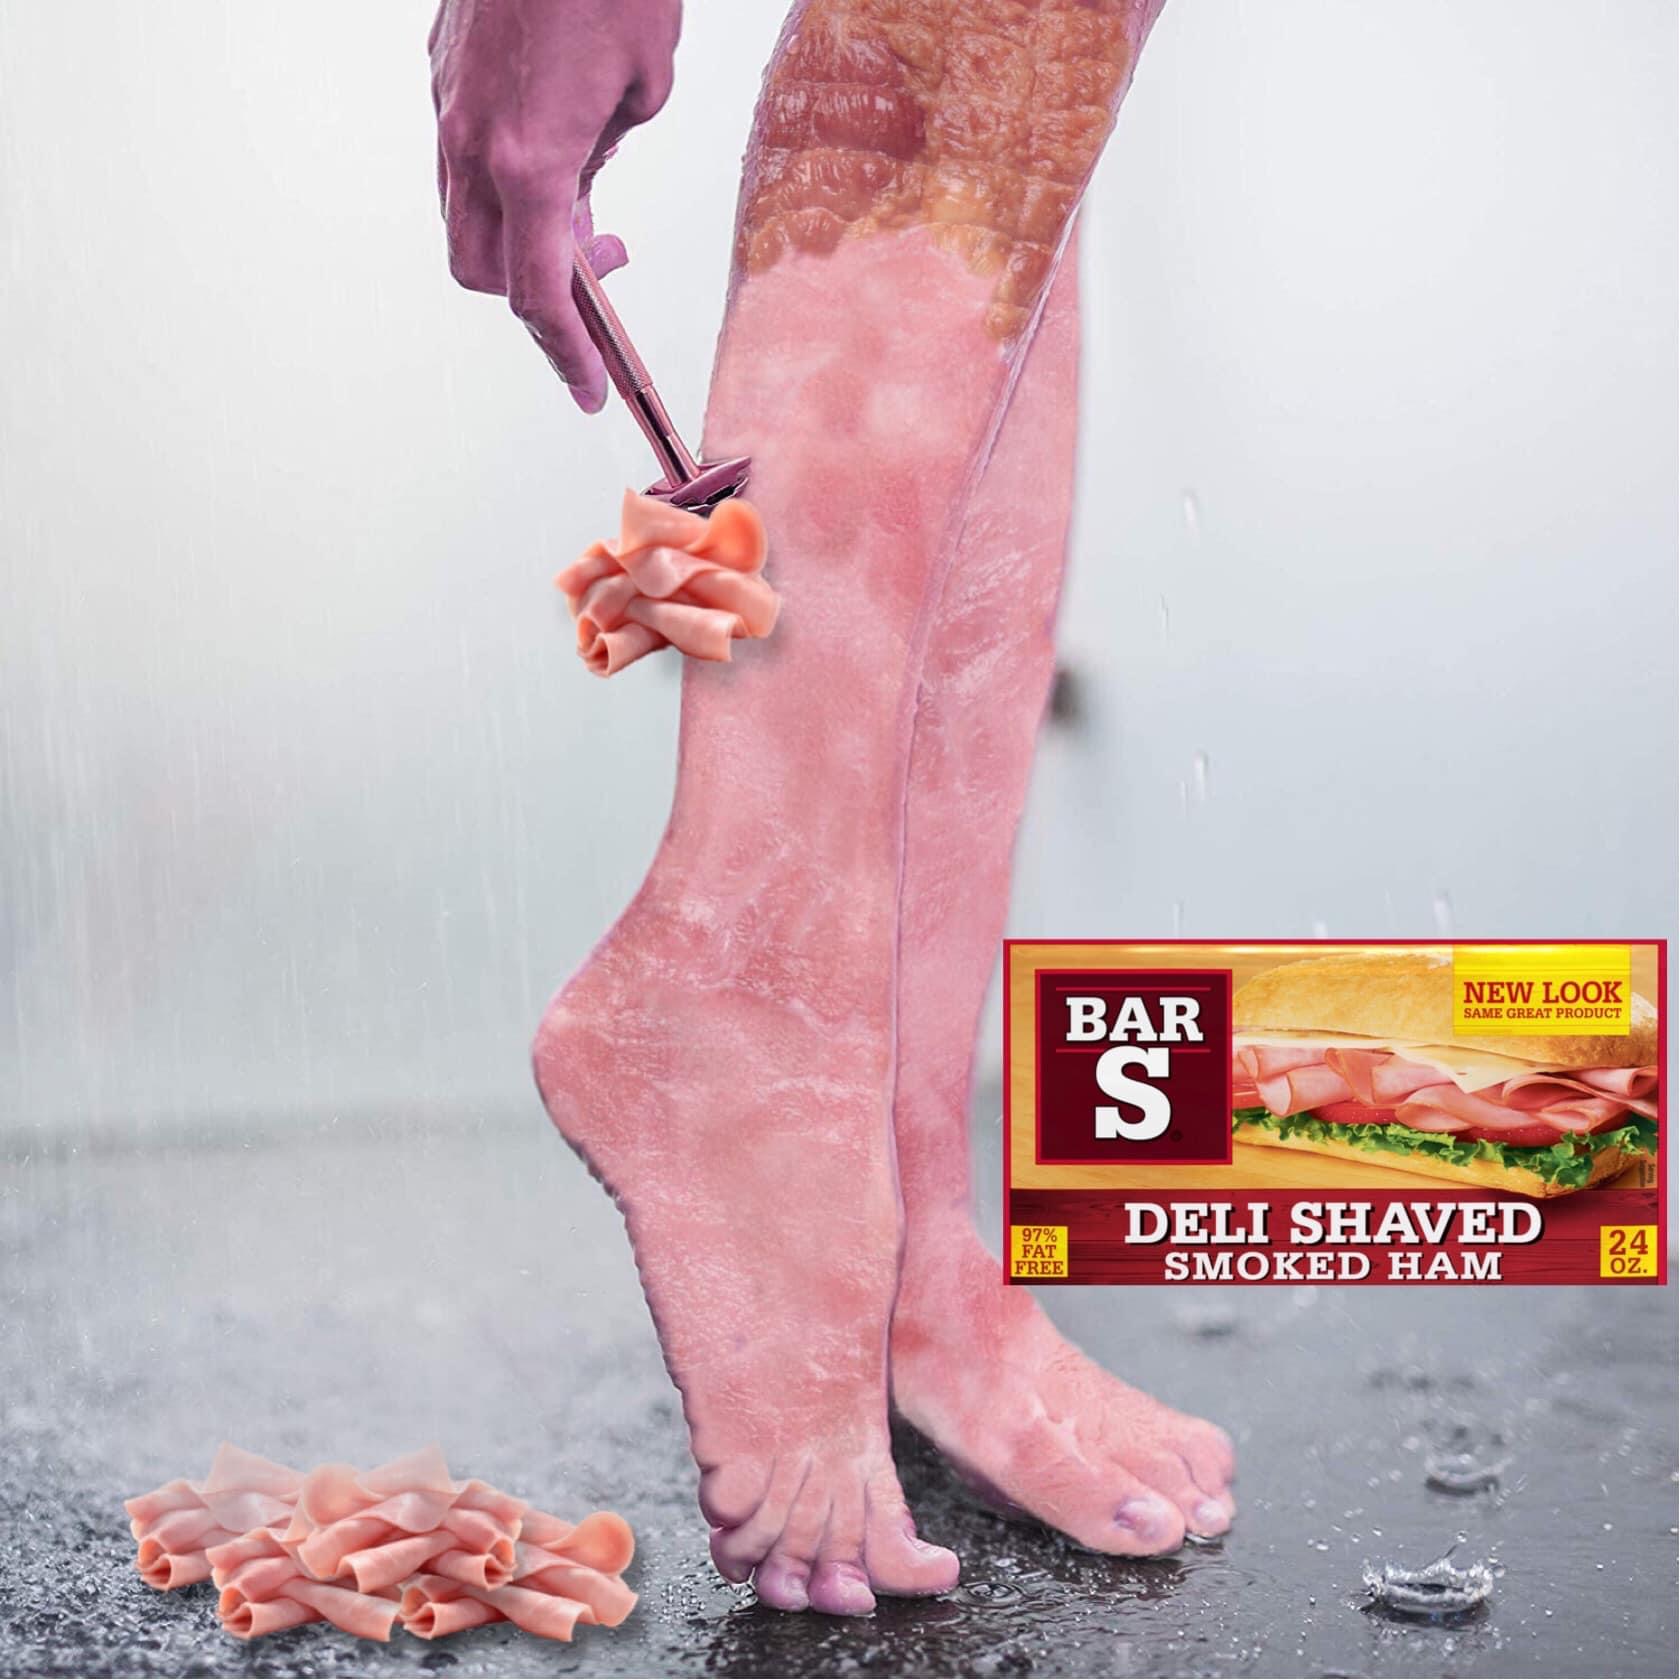 human leg - New Look Bar Same Great Product S 97% Fat Free Deli Shaved Smoked Ham 24 oz.